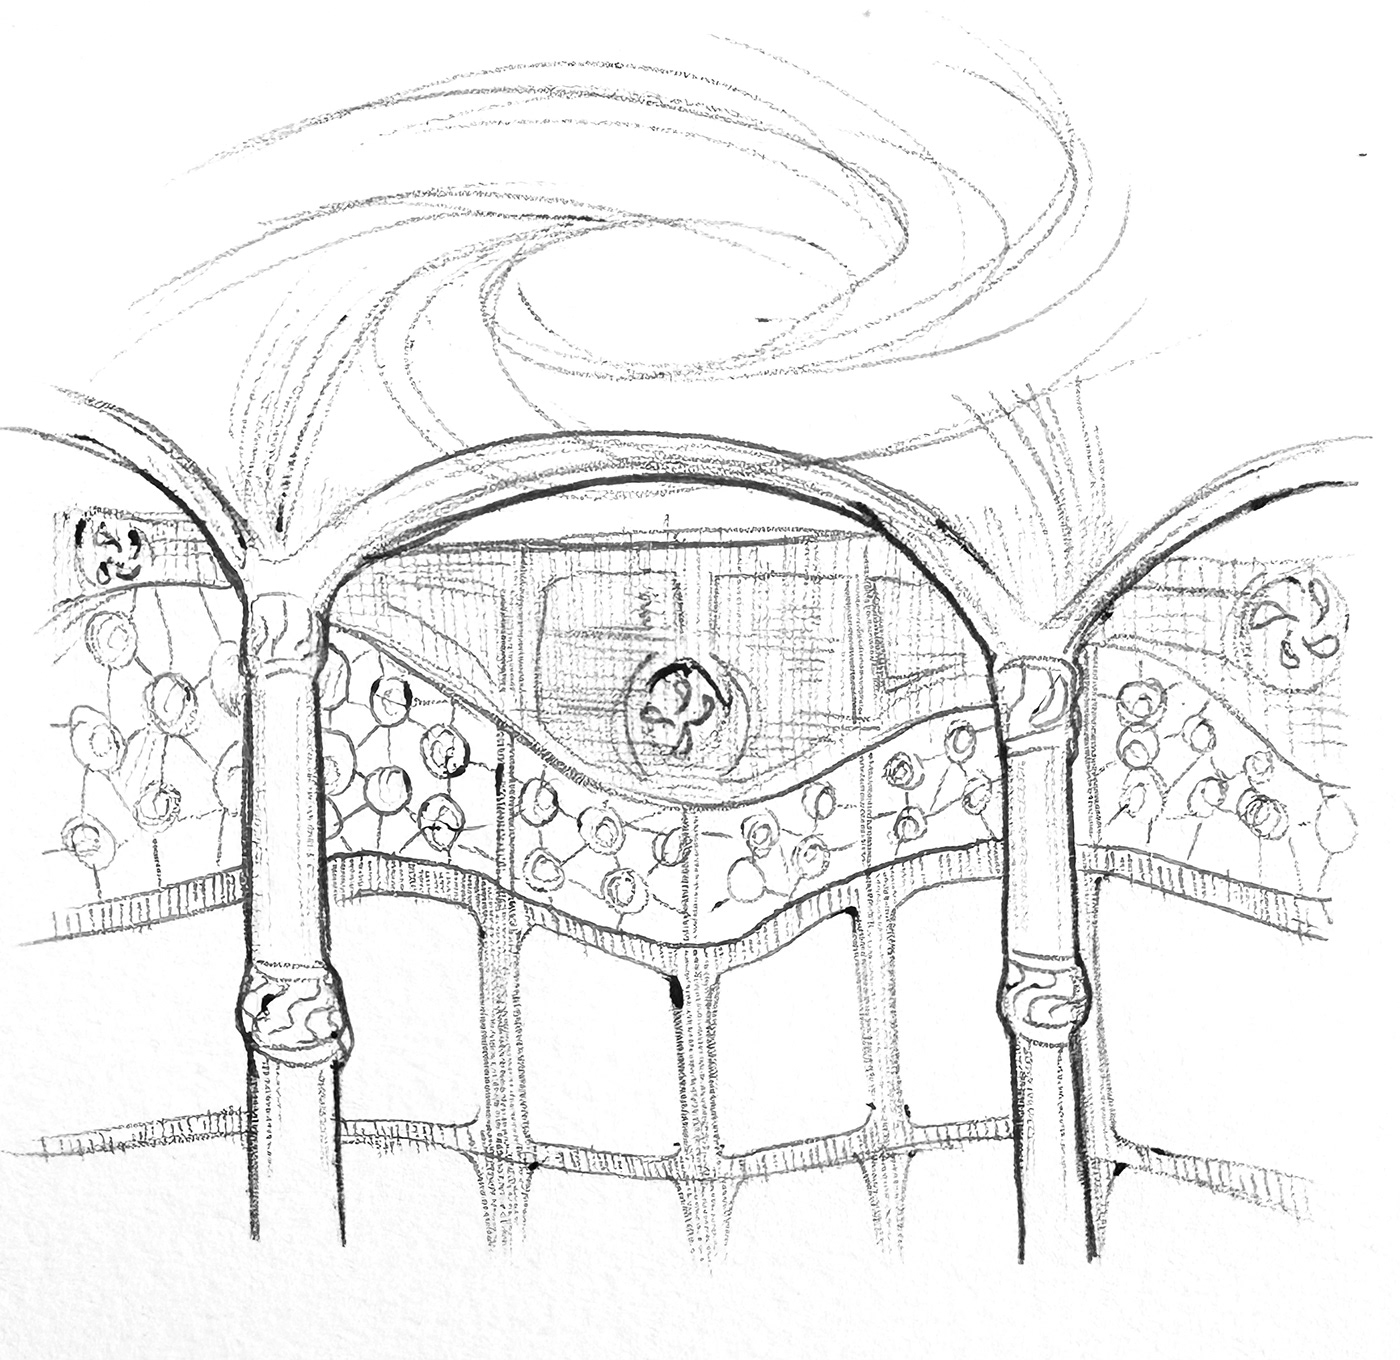 architecture sketches concept design Elevations bathroom design fantastical plans